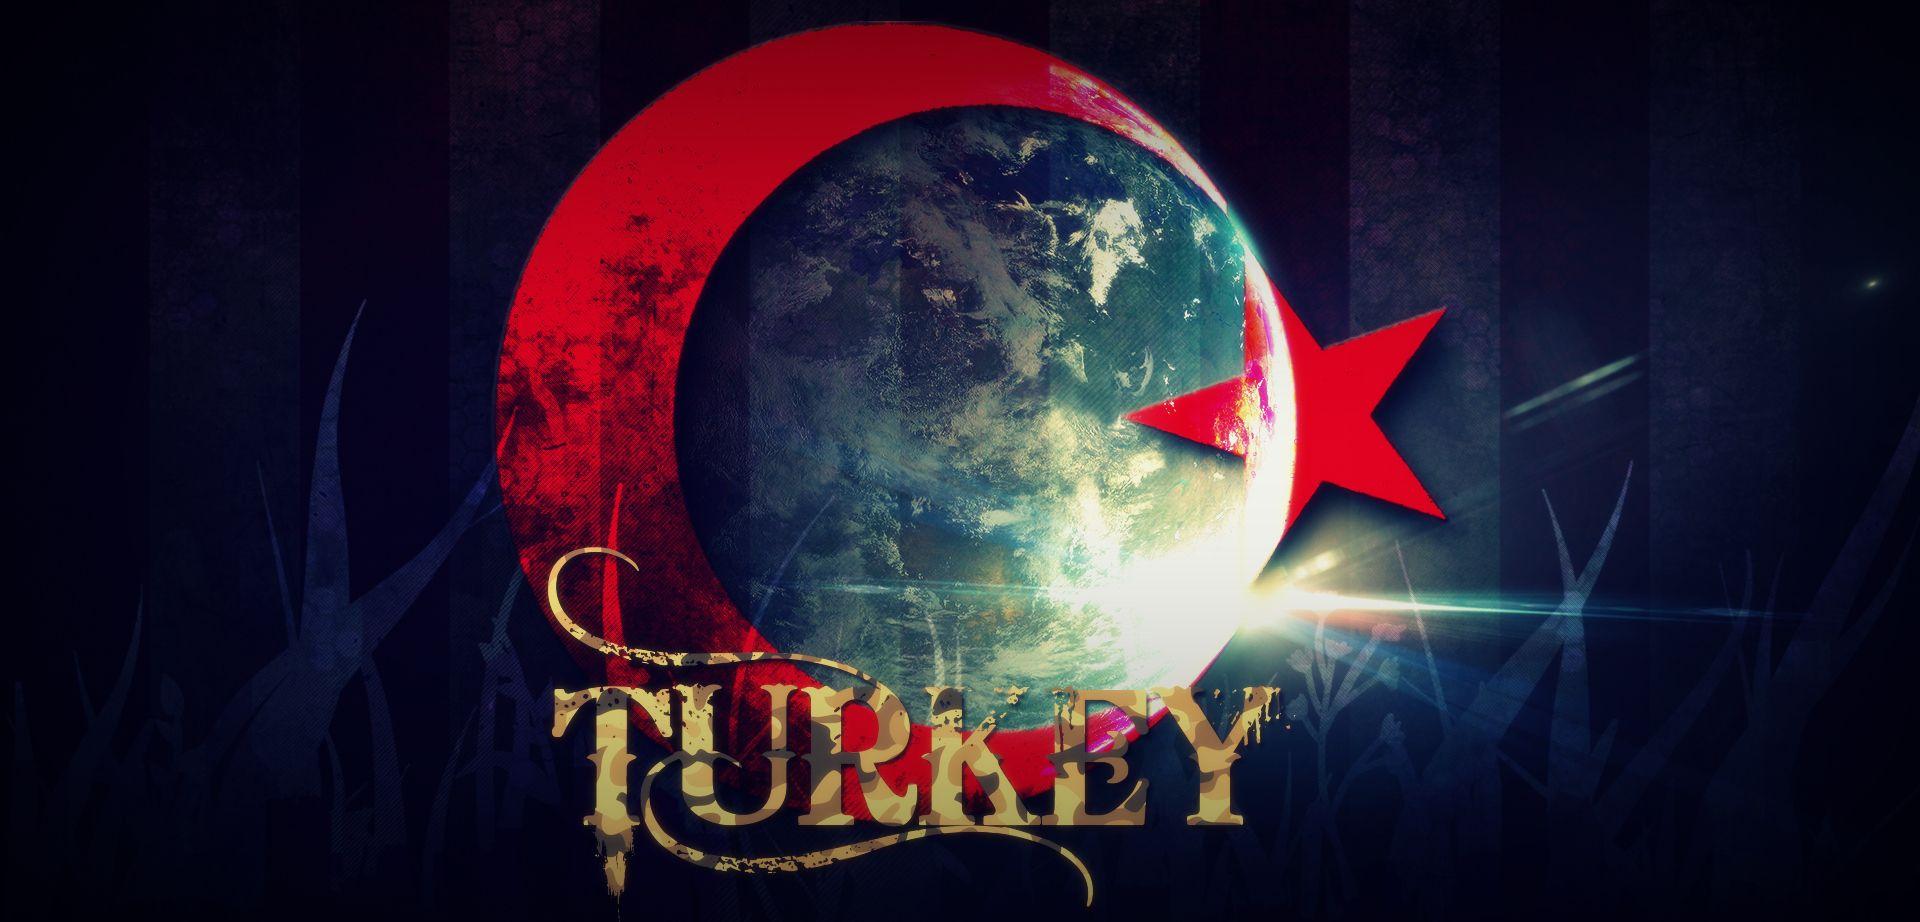 Turkey Wallpaper, Full HD 1080p, Best HD Turkey Picture